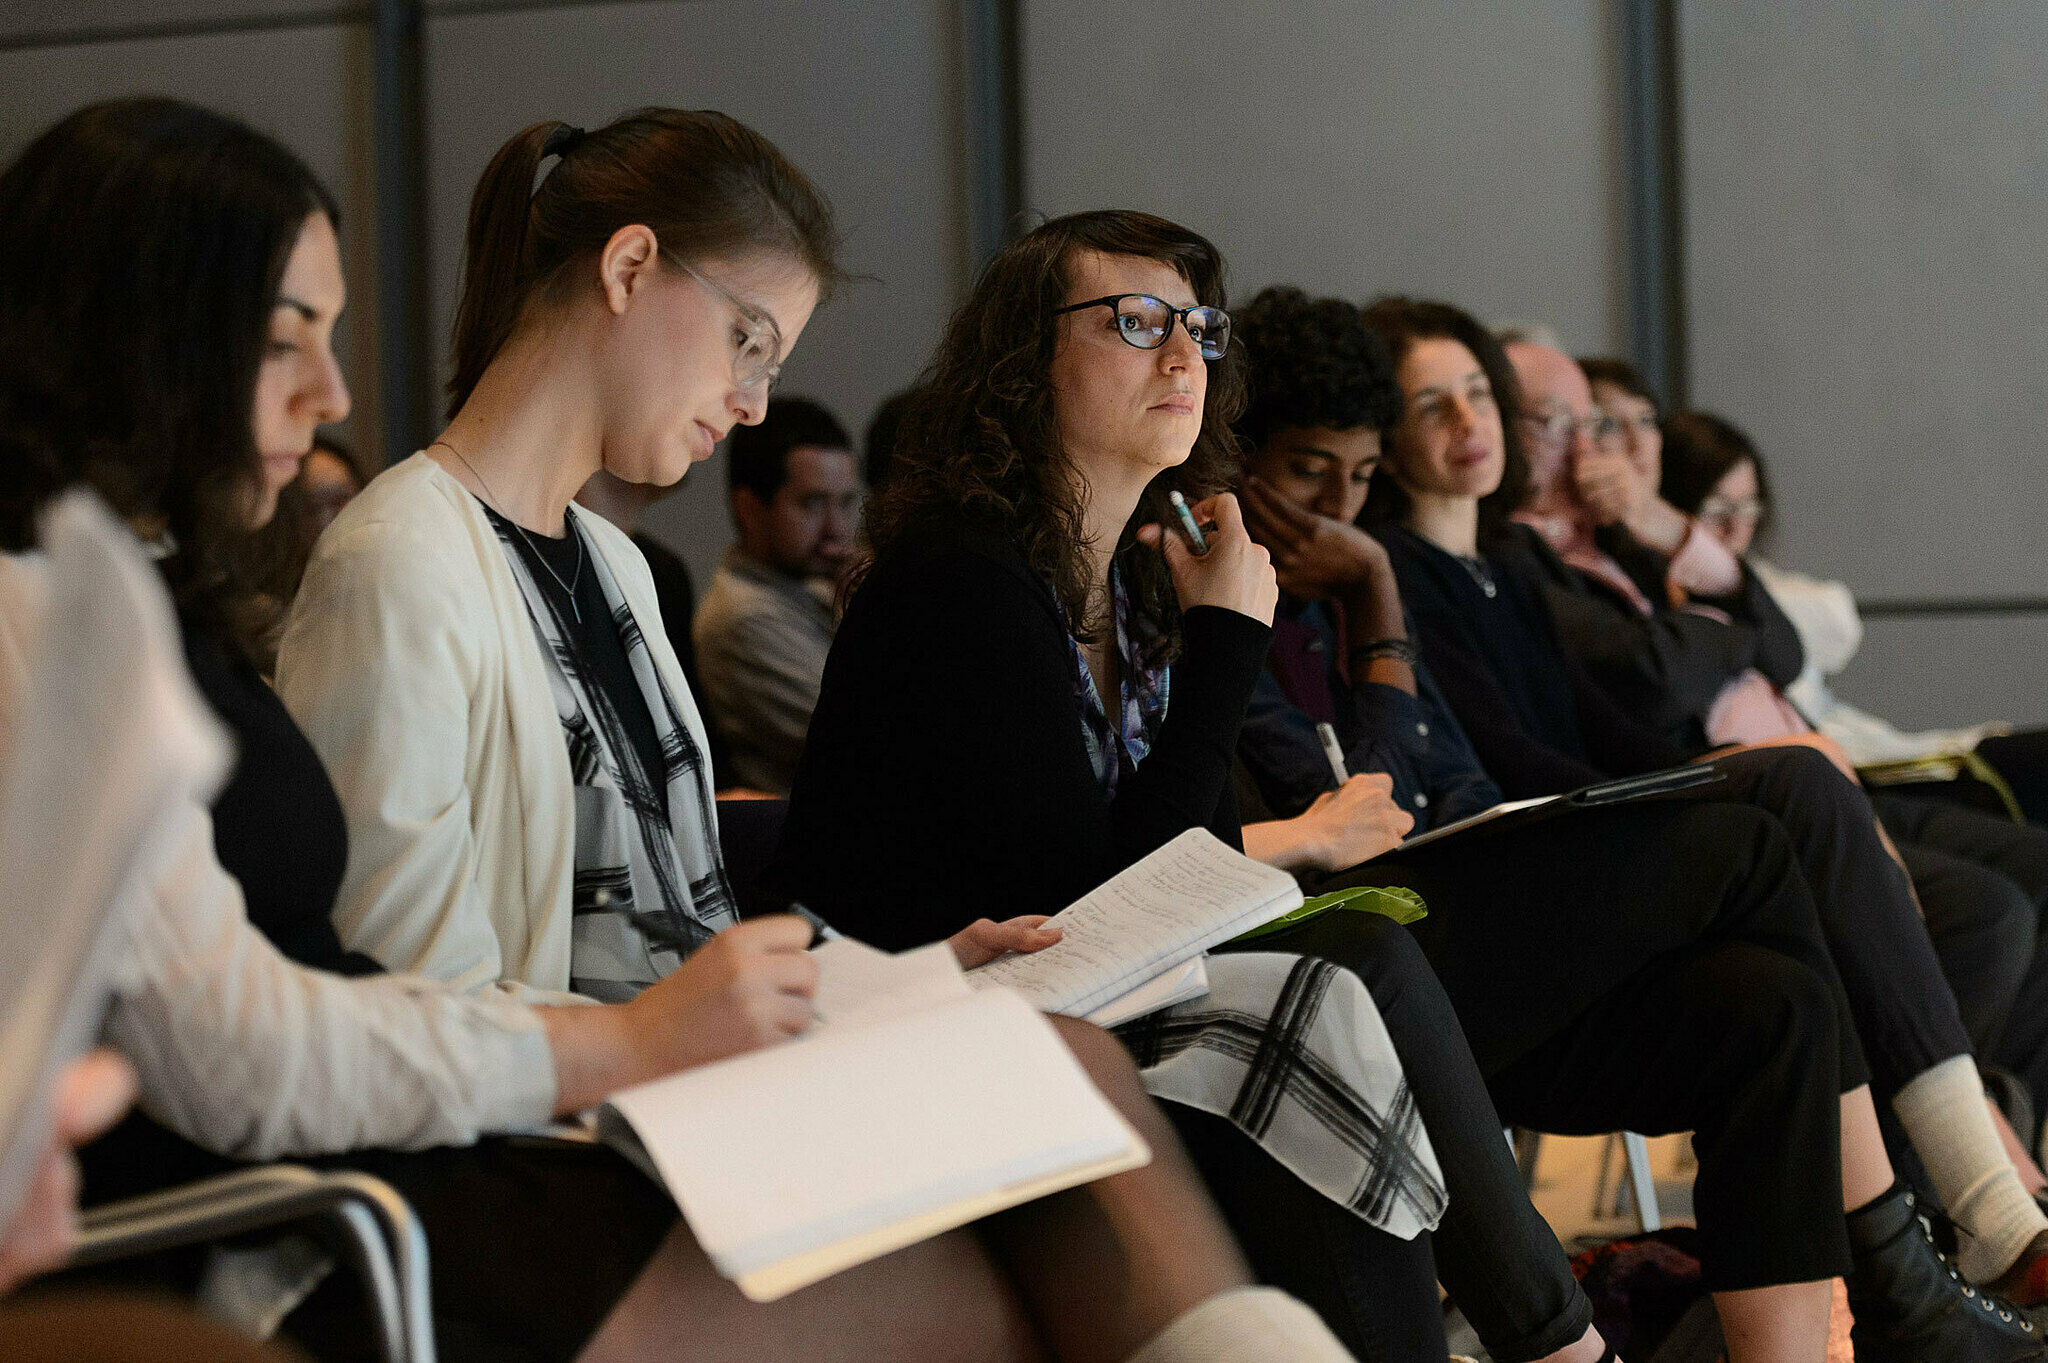 Participants in the 2015 ISP Symposium prepare for presentations